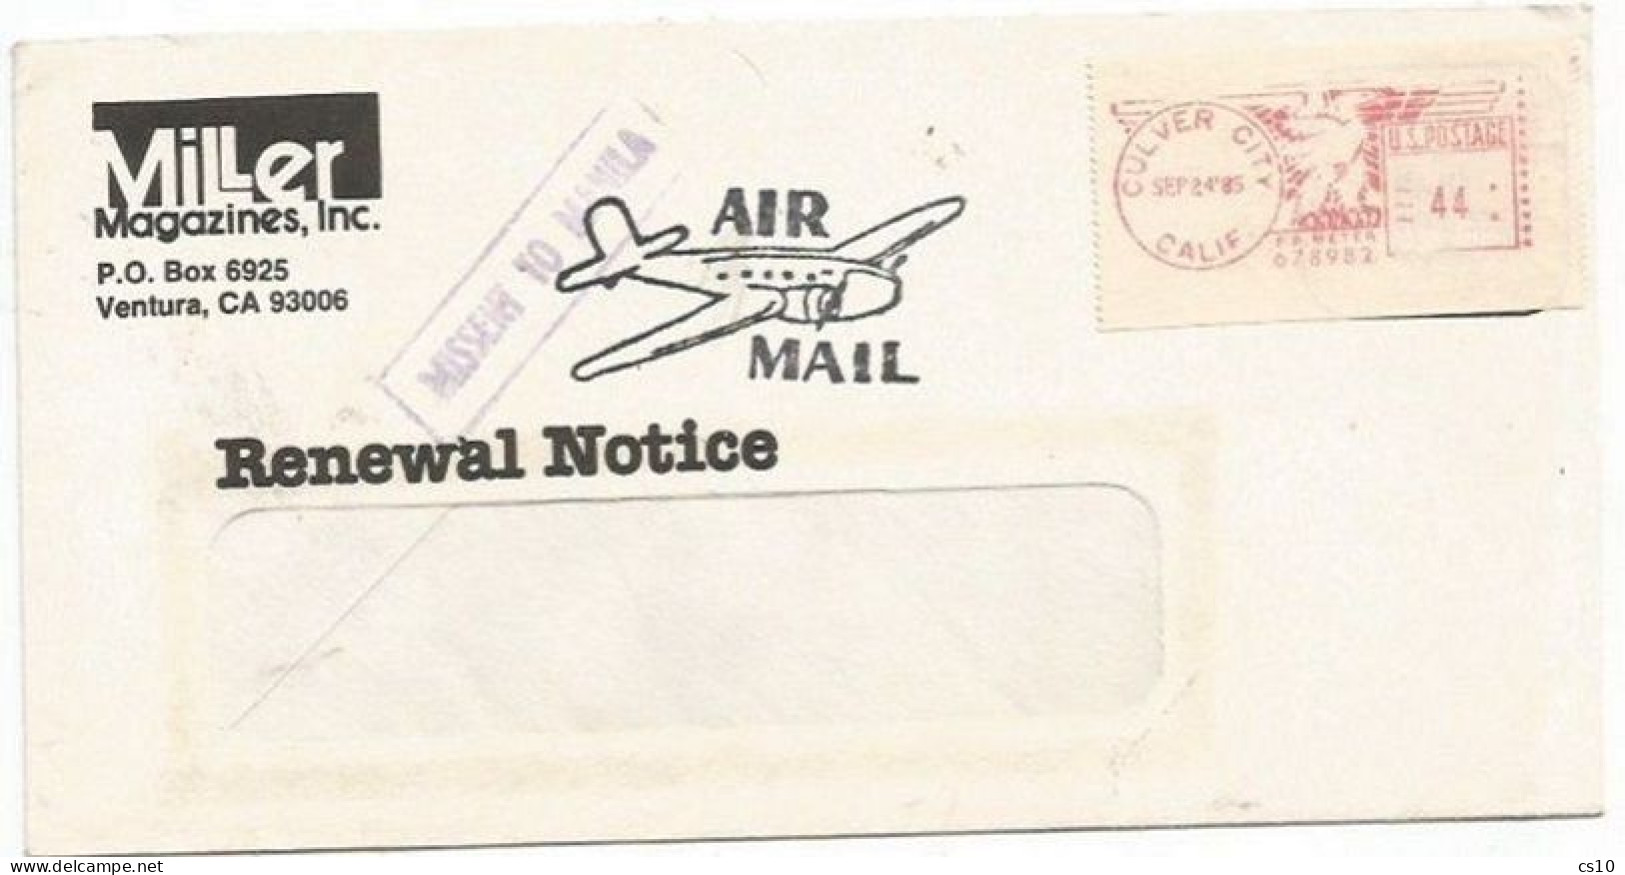 USA 1985 AirmailCV Culver City CA 24sep85 X Italy Milano "MISSENT TO MANILA" Postage Label C.44 - Poststempel